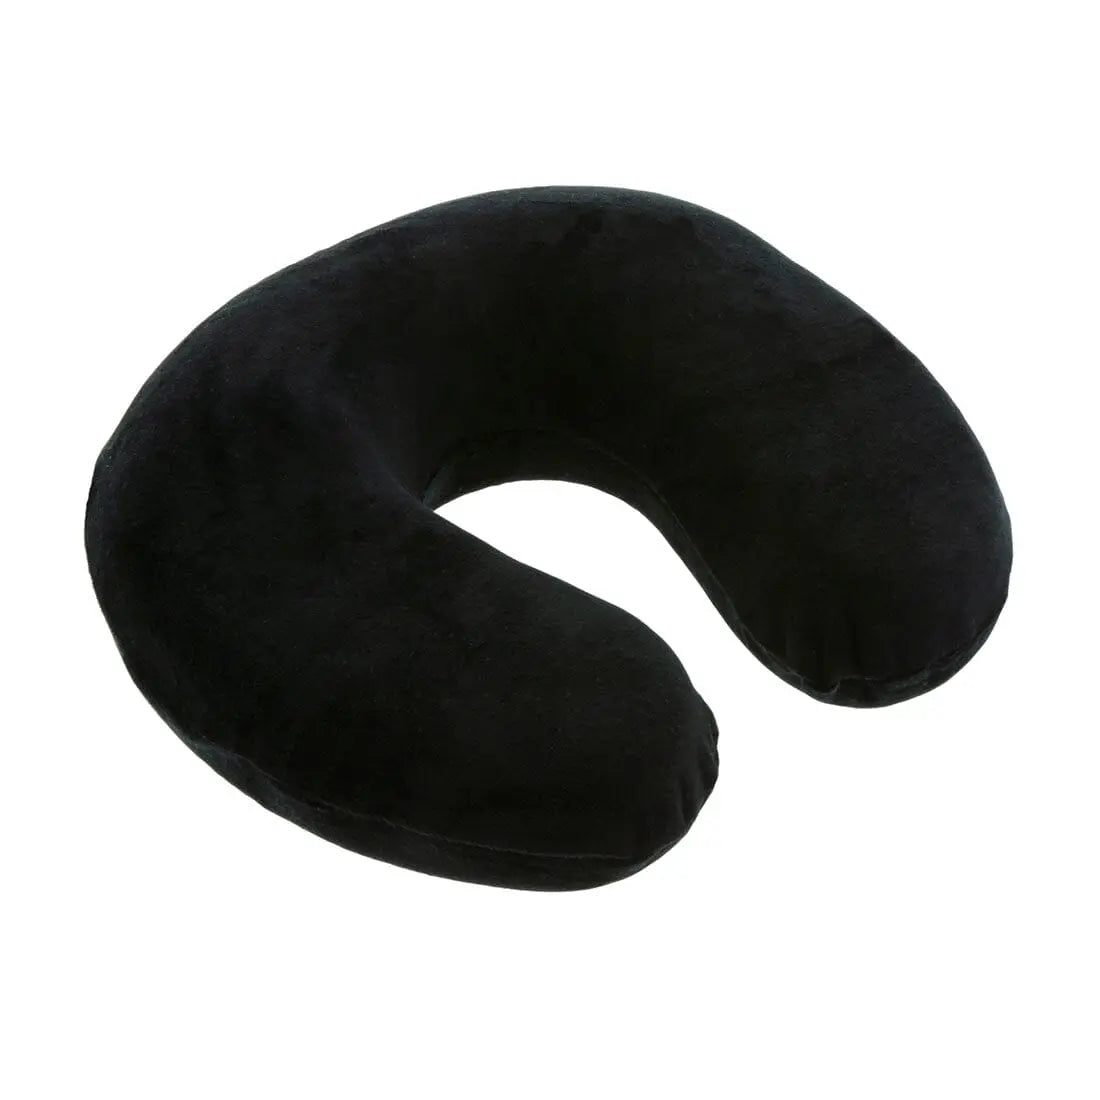 Memory Foam Facial Pillow and Cover Pillow Cover - Black  